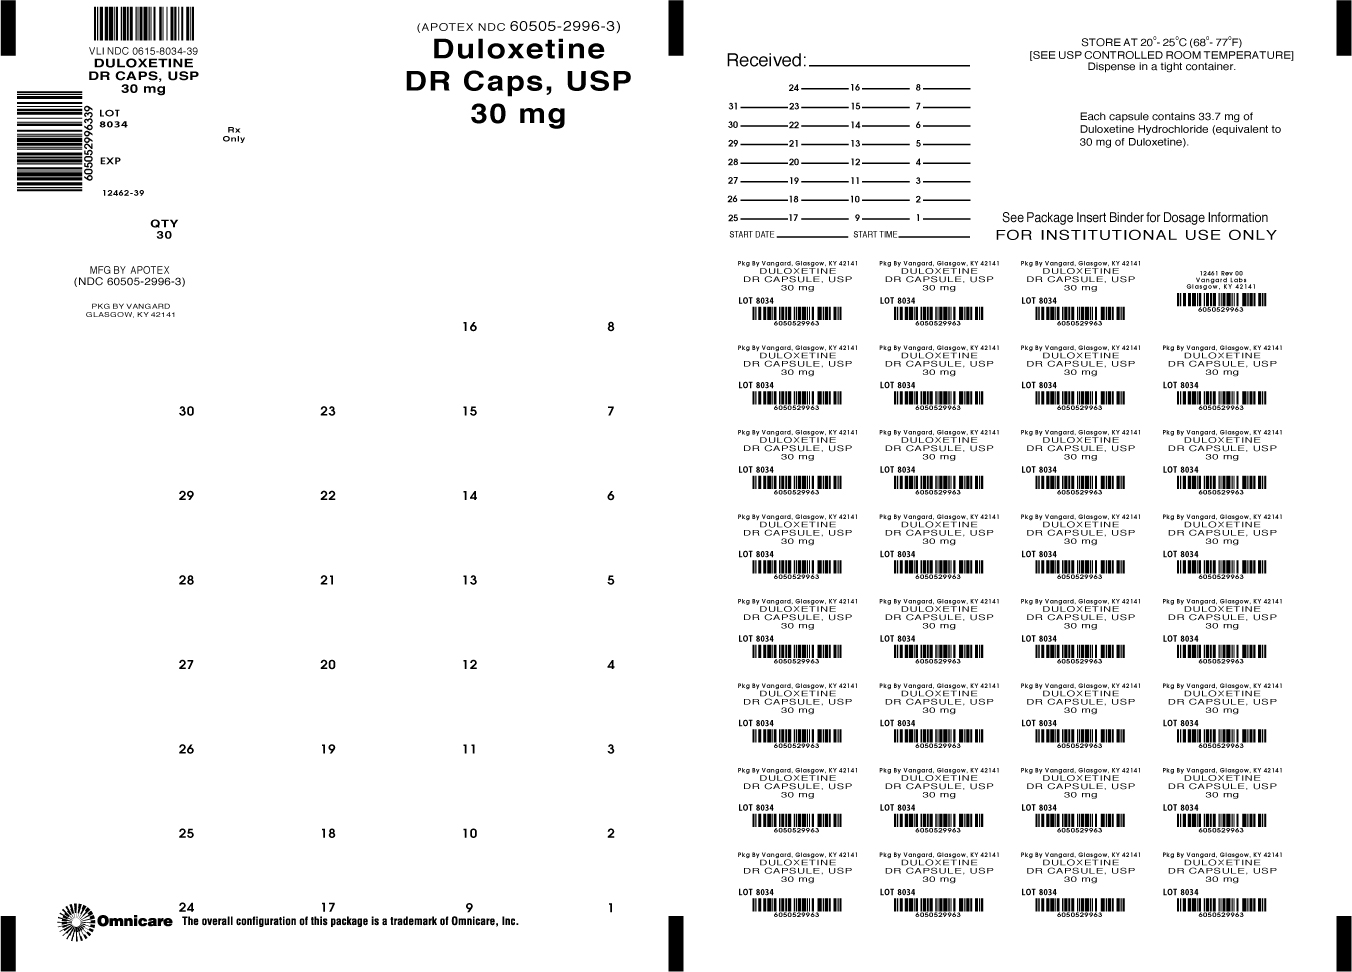 Duloxetine DR Caps, USP 30mg bingo card label